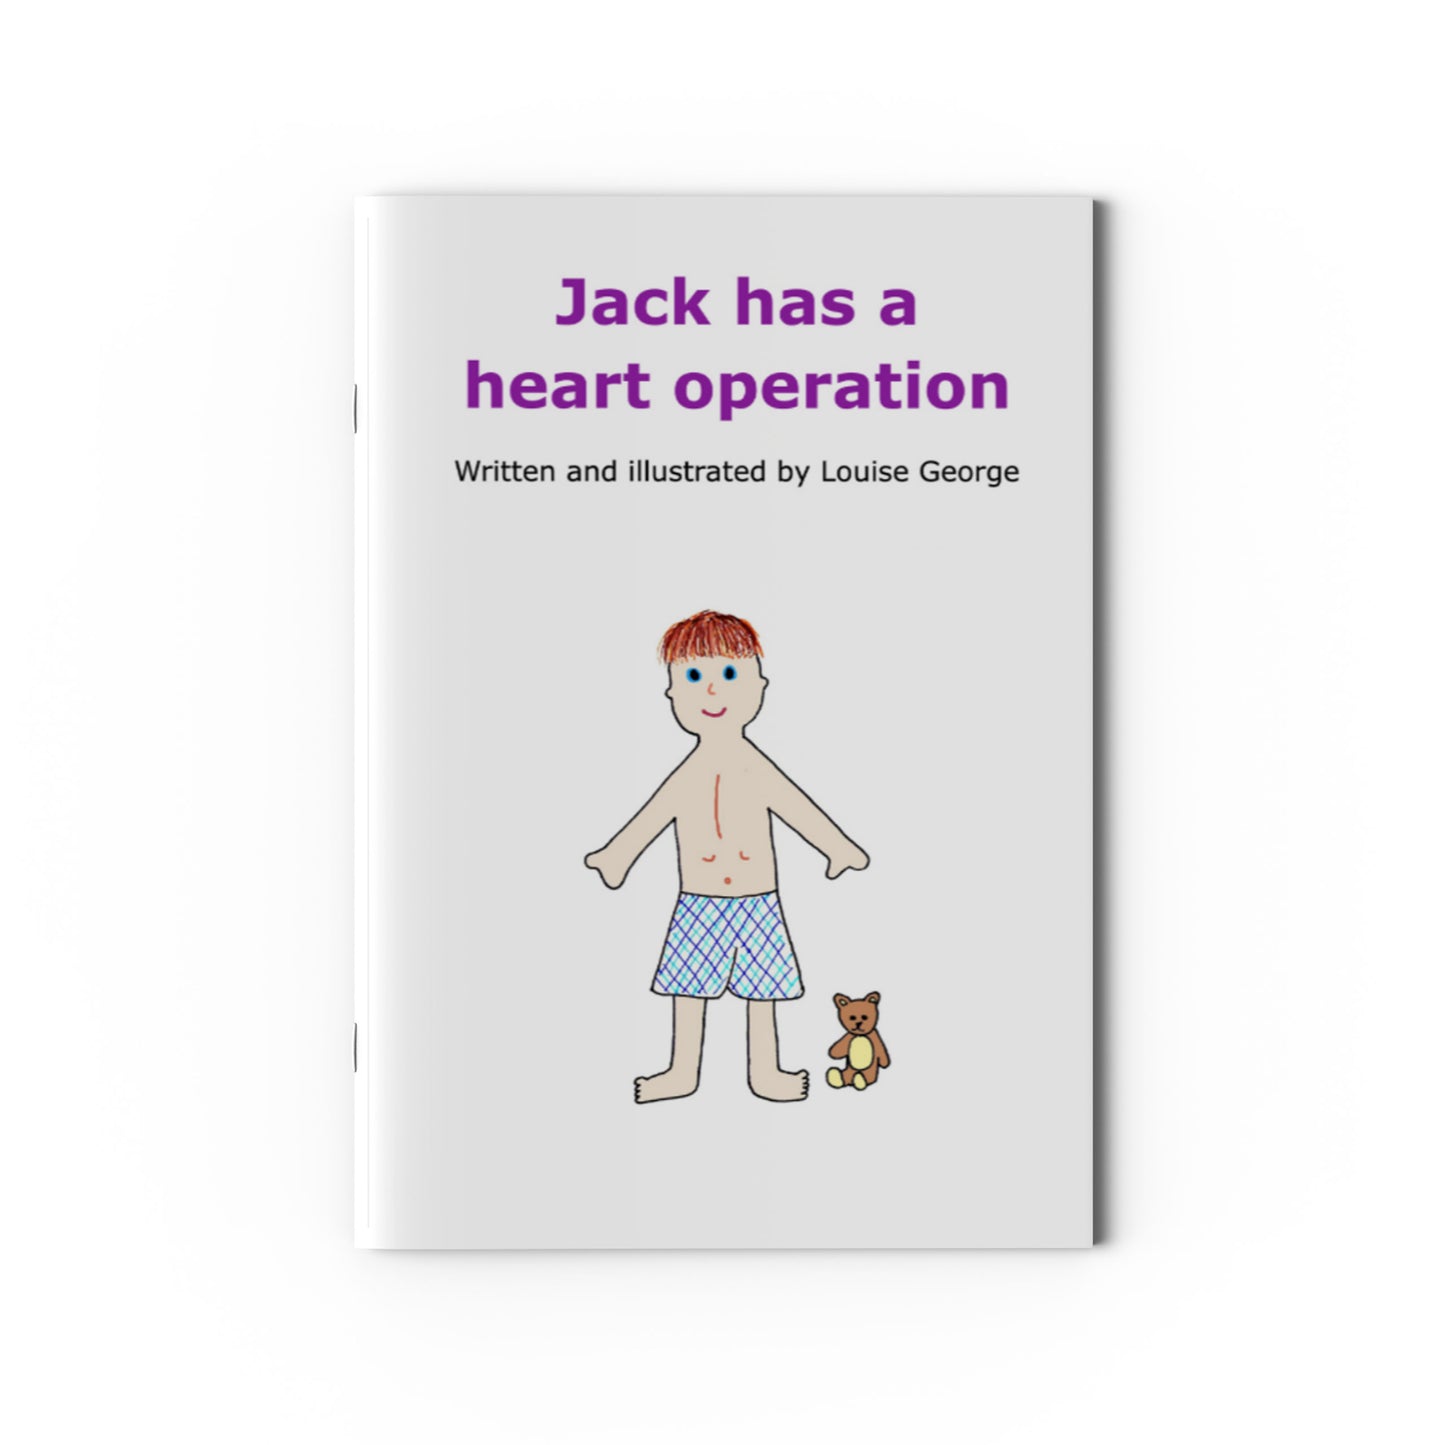 Jack has a heart operation